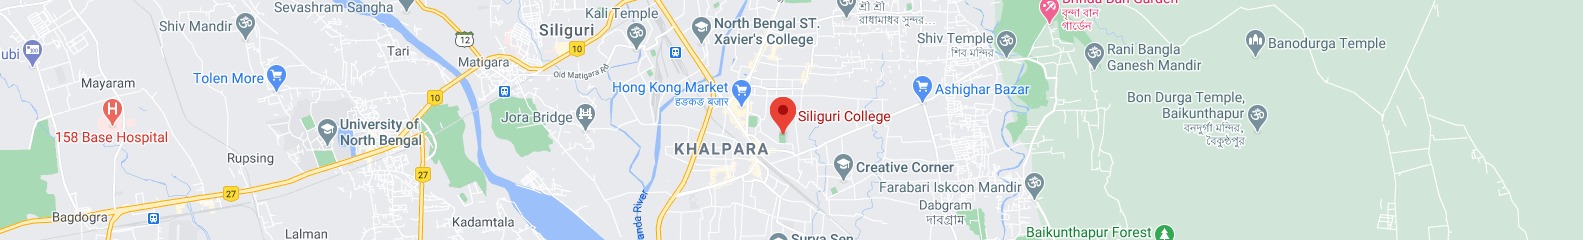 Siliguri College Map